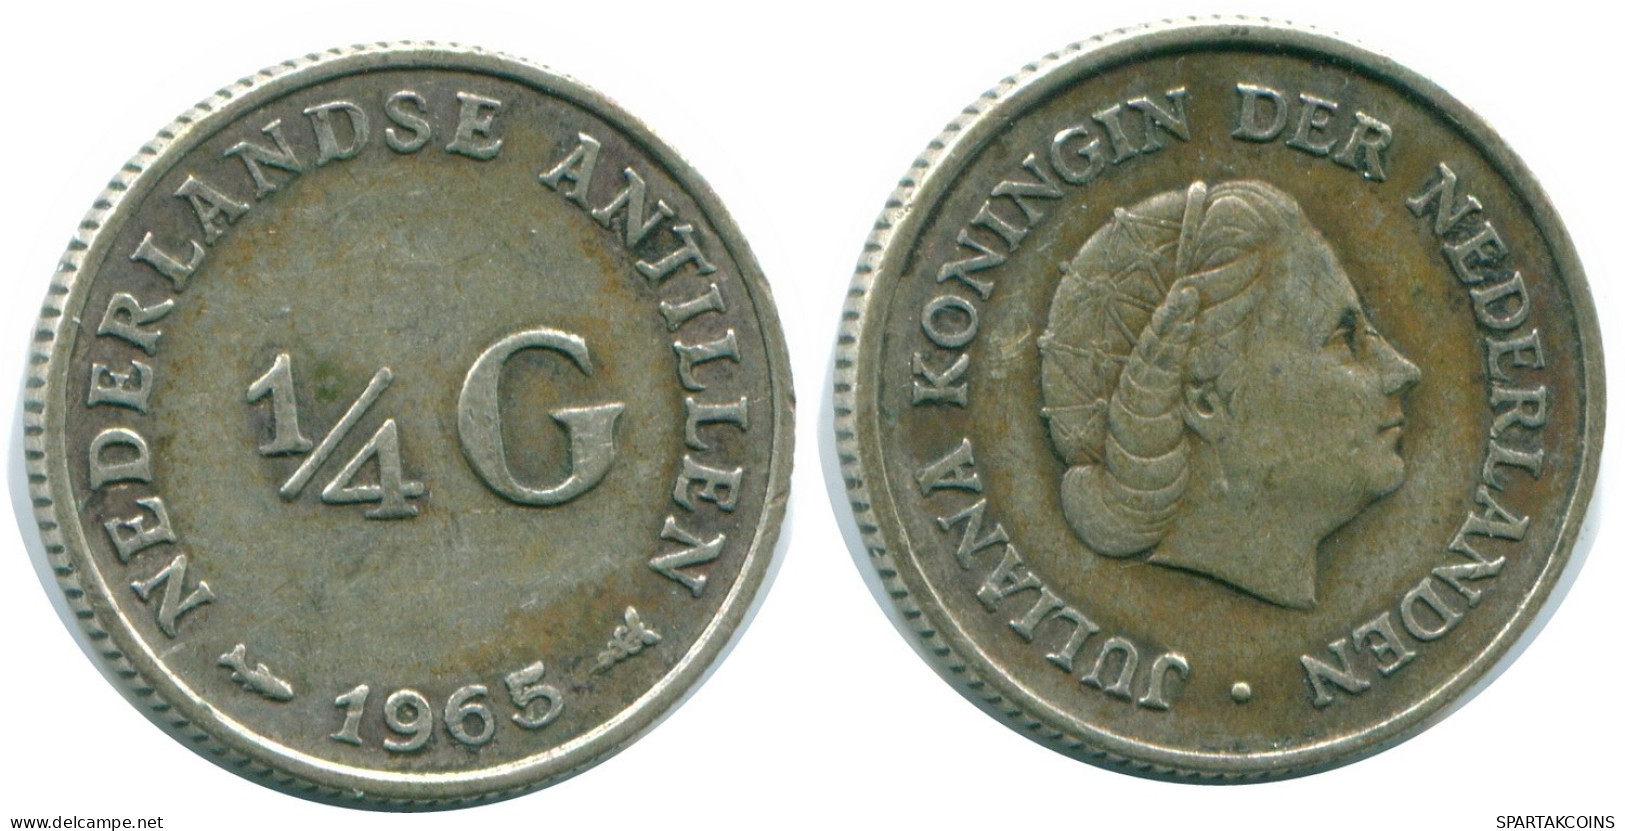 1/4 GULDEN 1965 NIEDERLÄNDISCHE ANTILLEN SILBER Koloniale Münze #NL11339.4.D.A - Netherlands Antilles